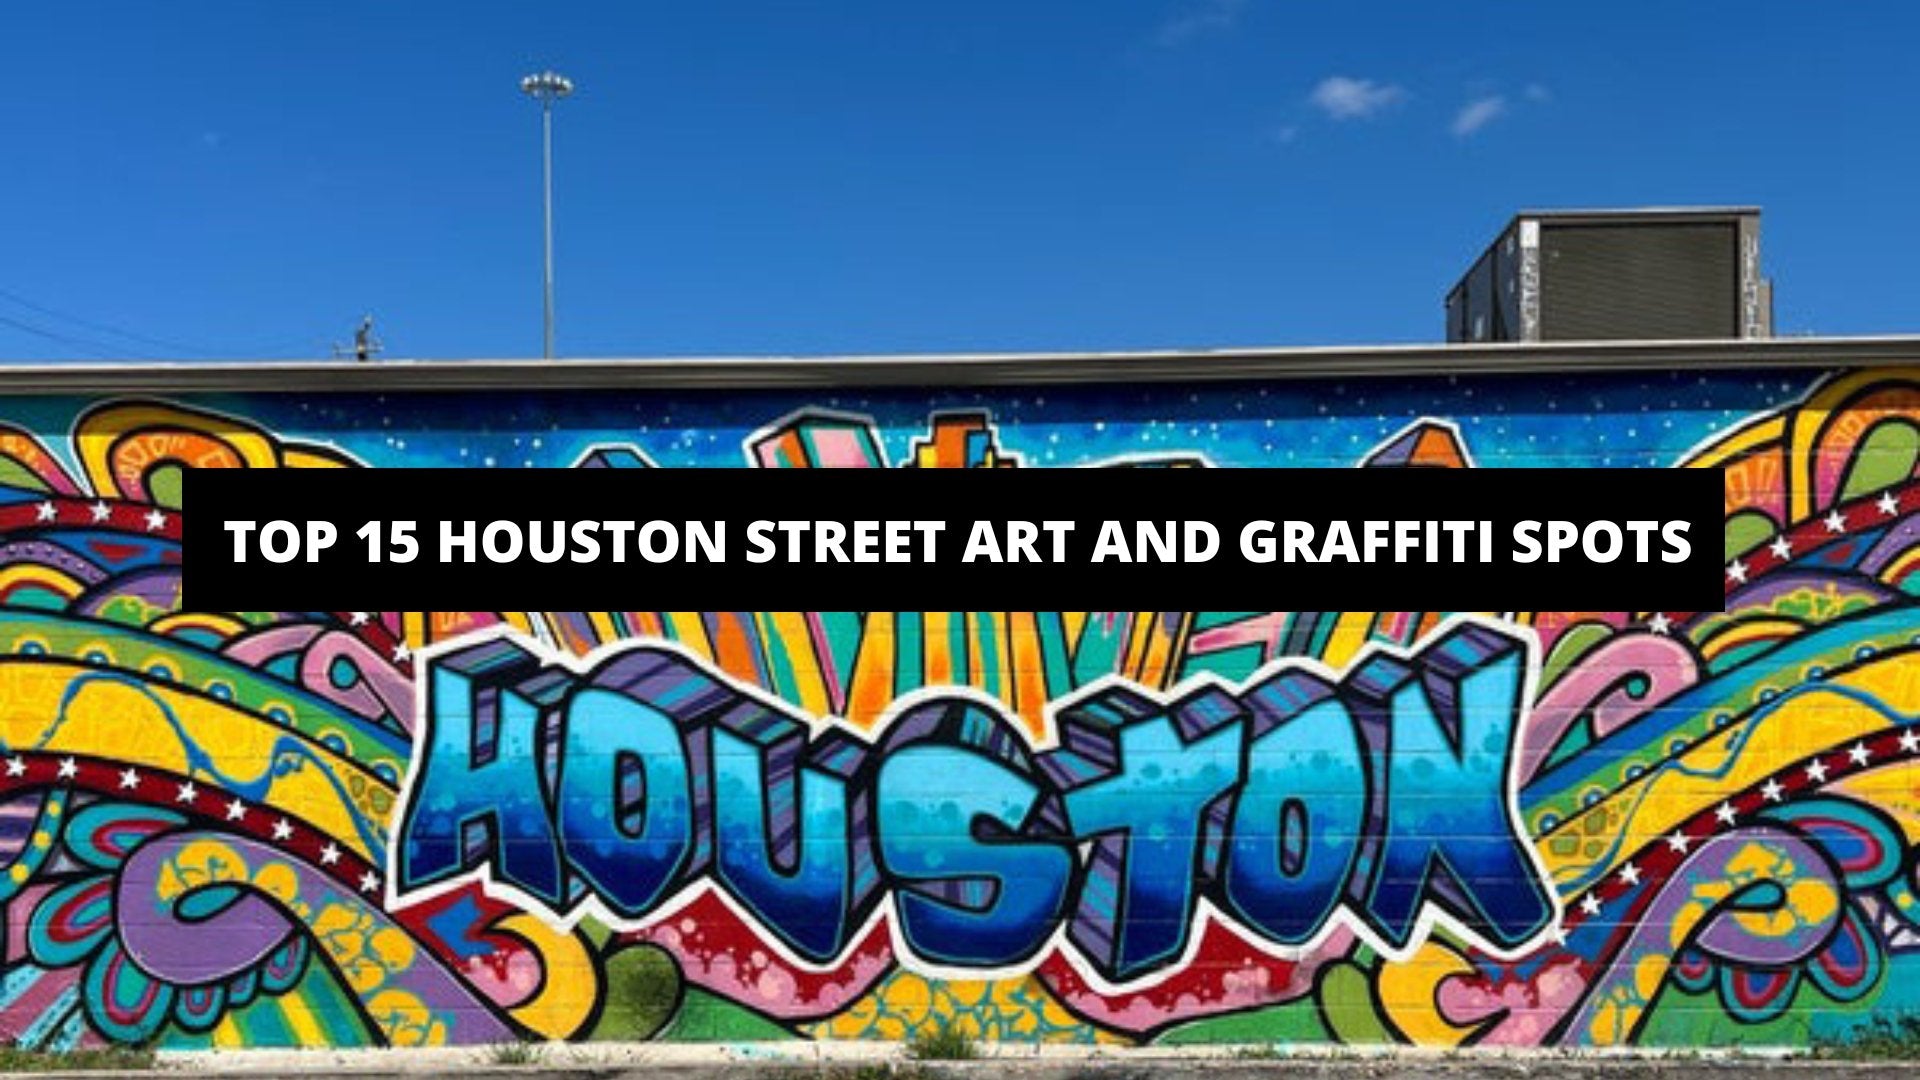 Top 15 Houston Street Art and Graffiti Spots - The Trendy Art